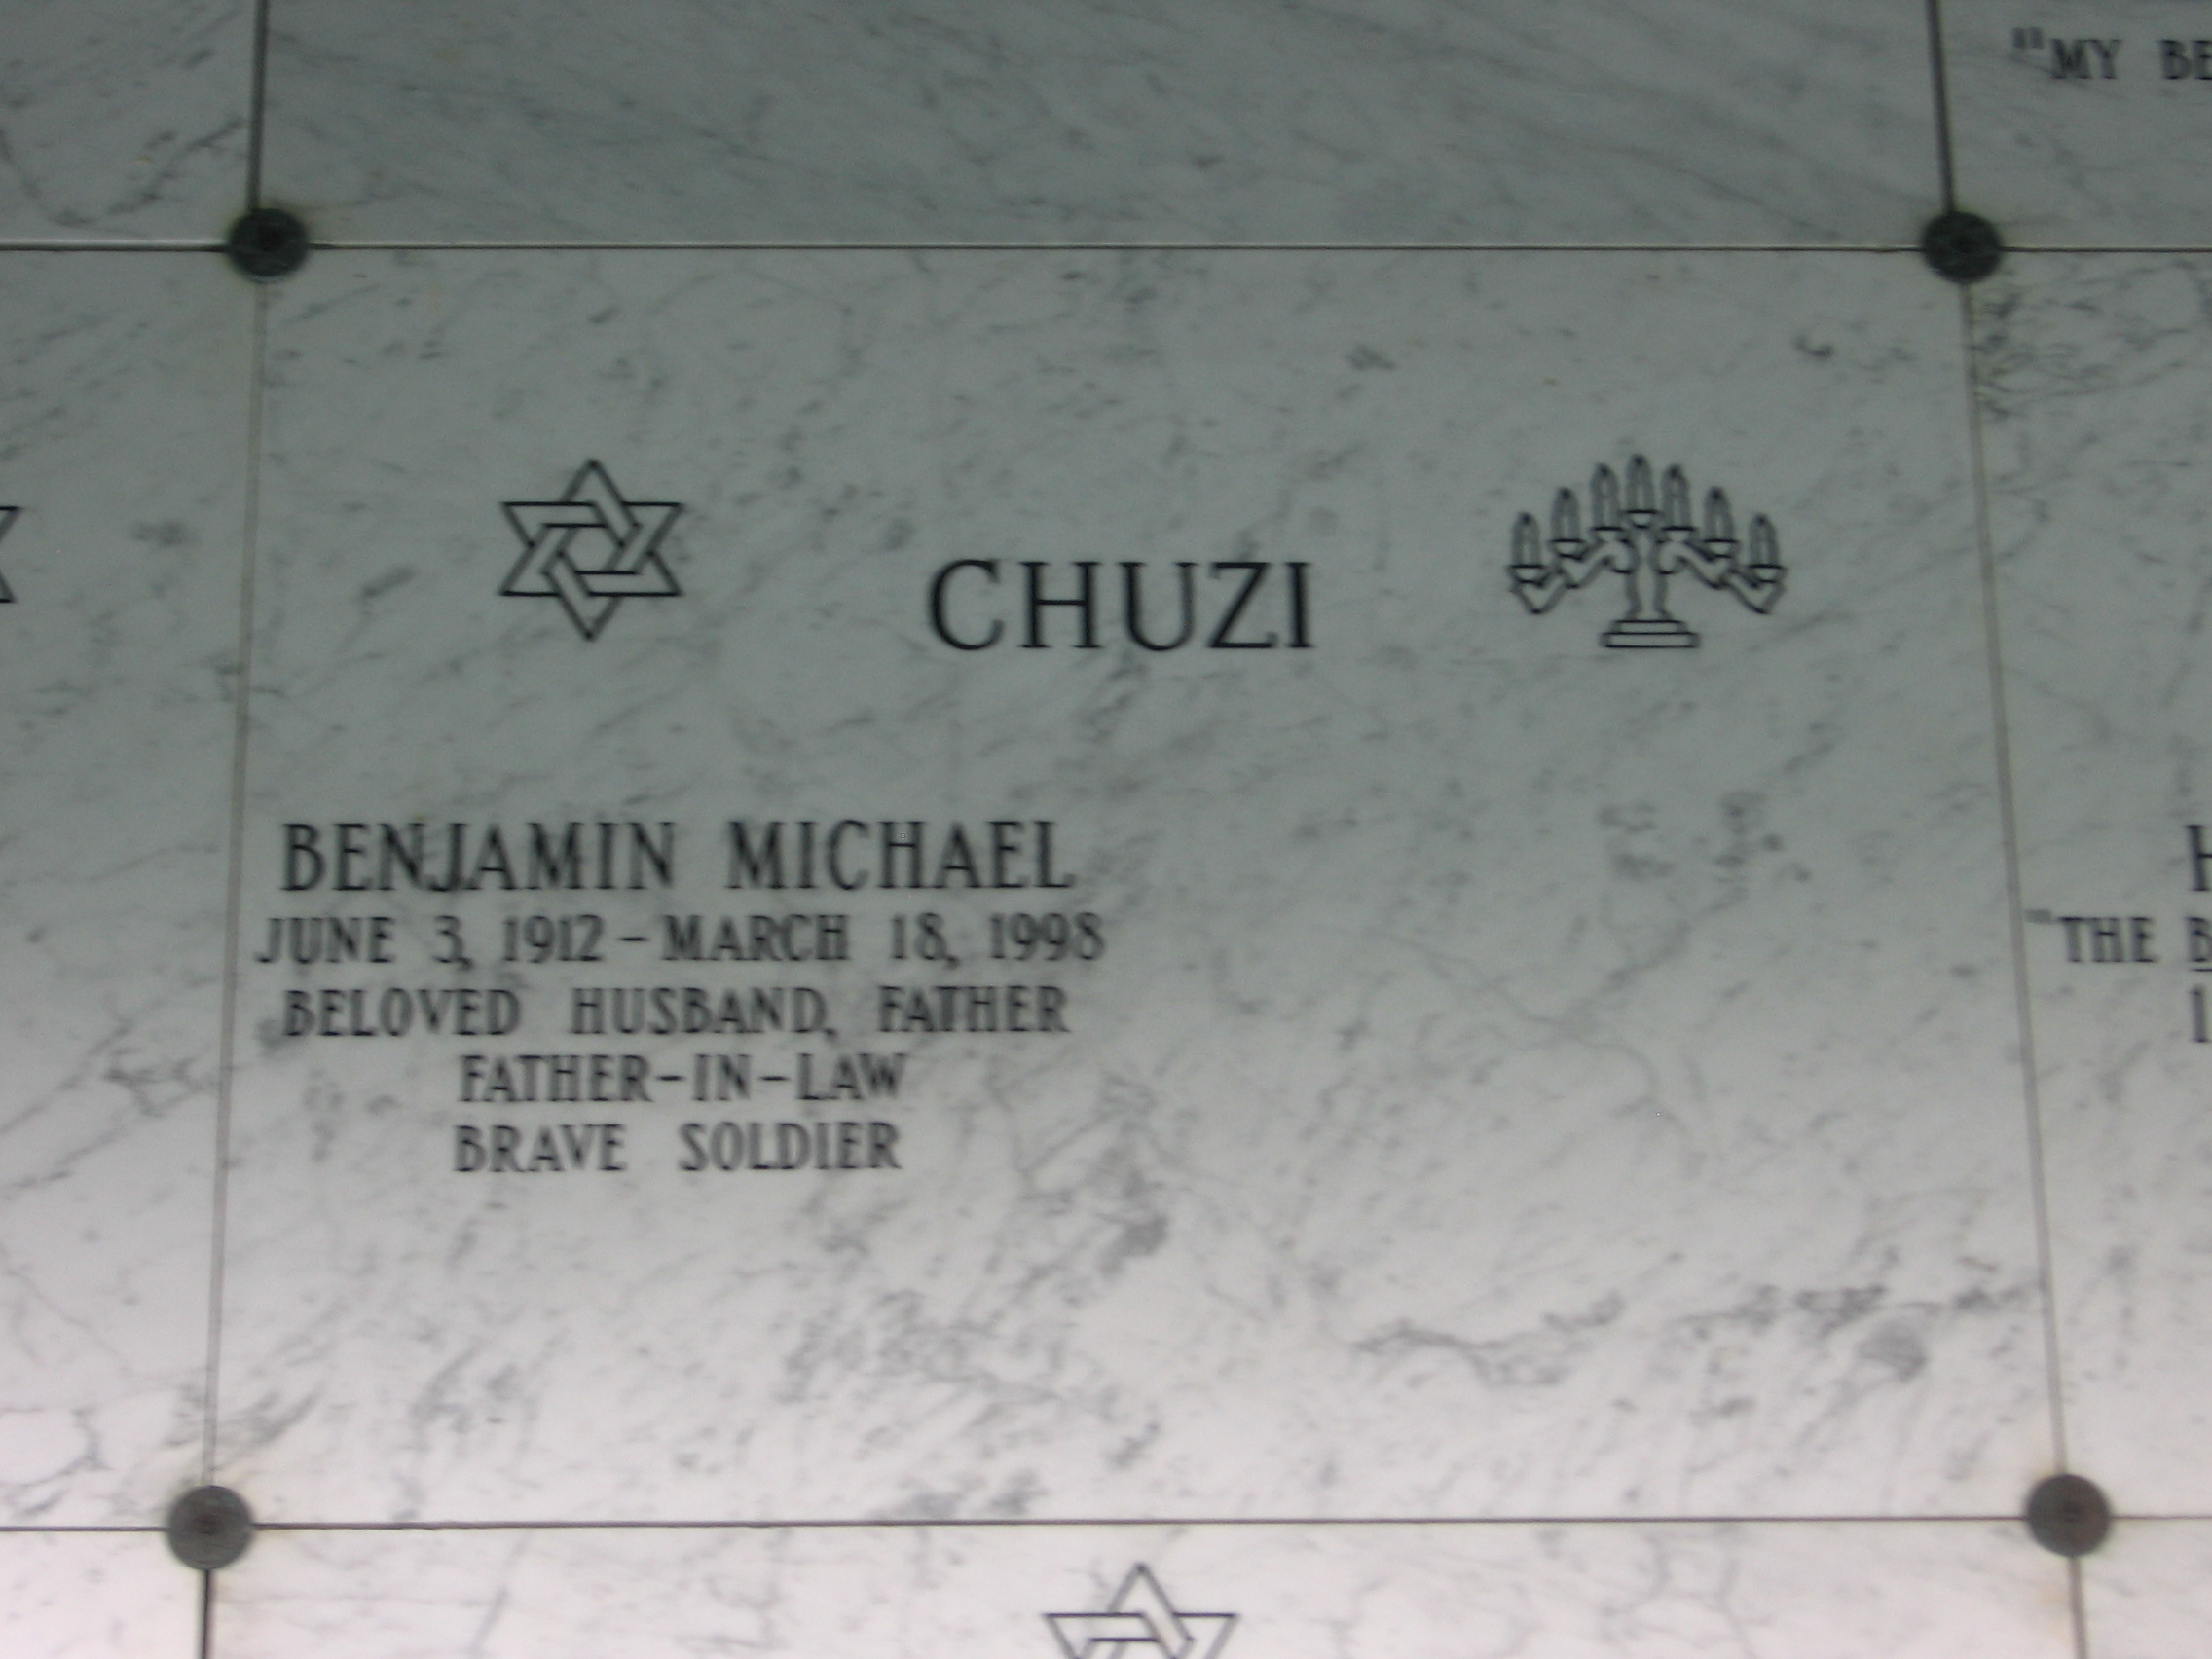 Benjamin Michael Chuzi